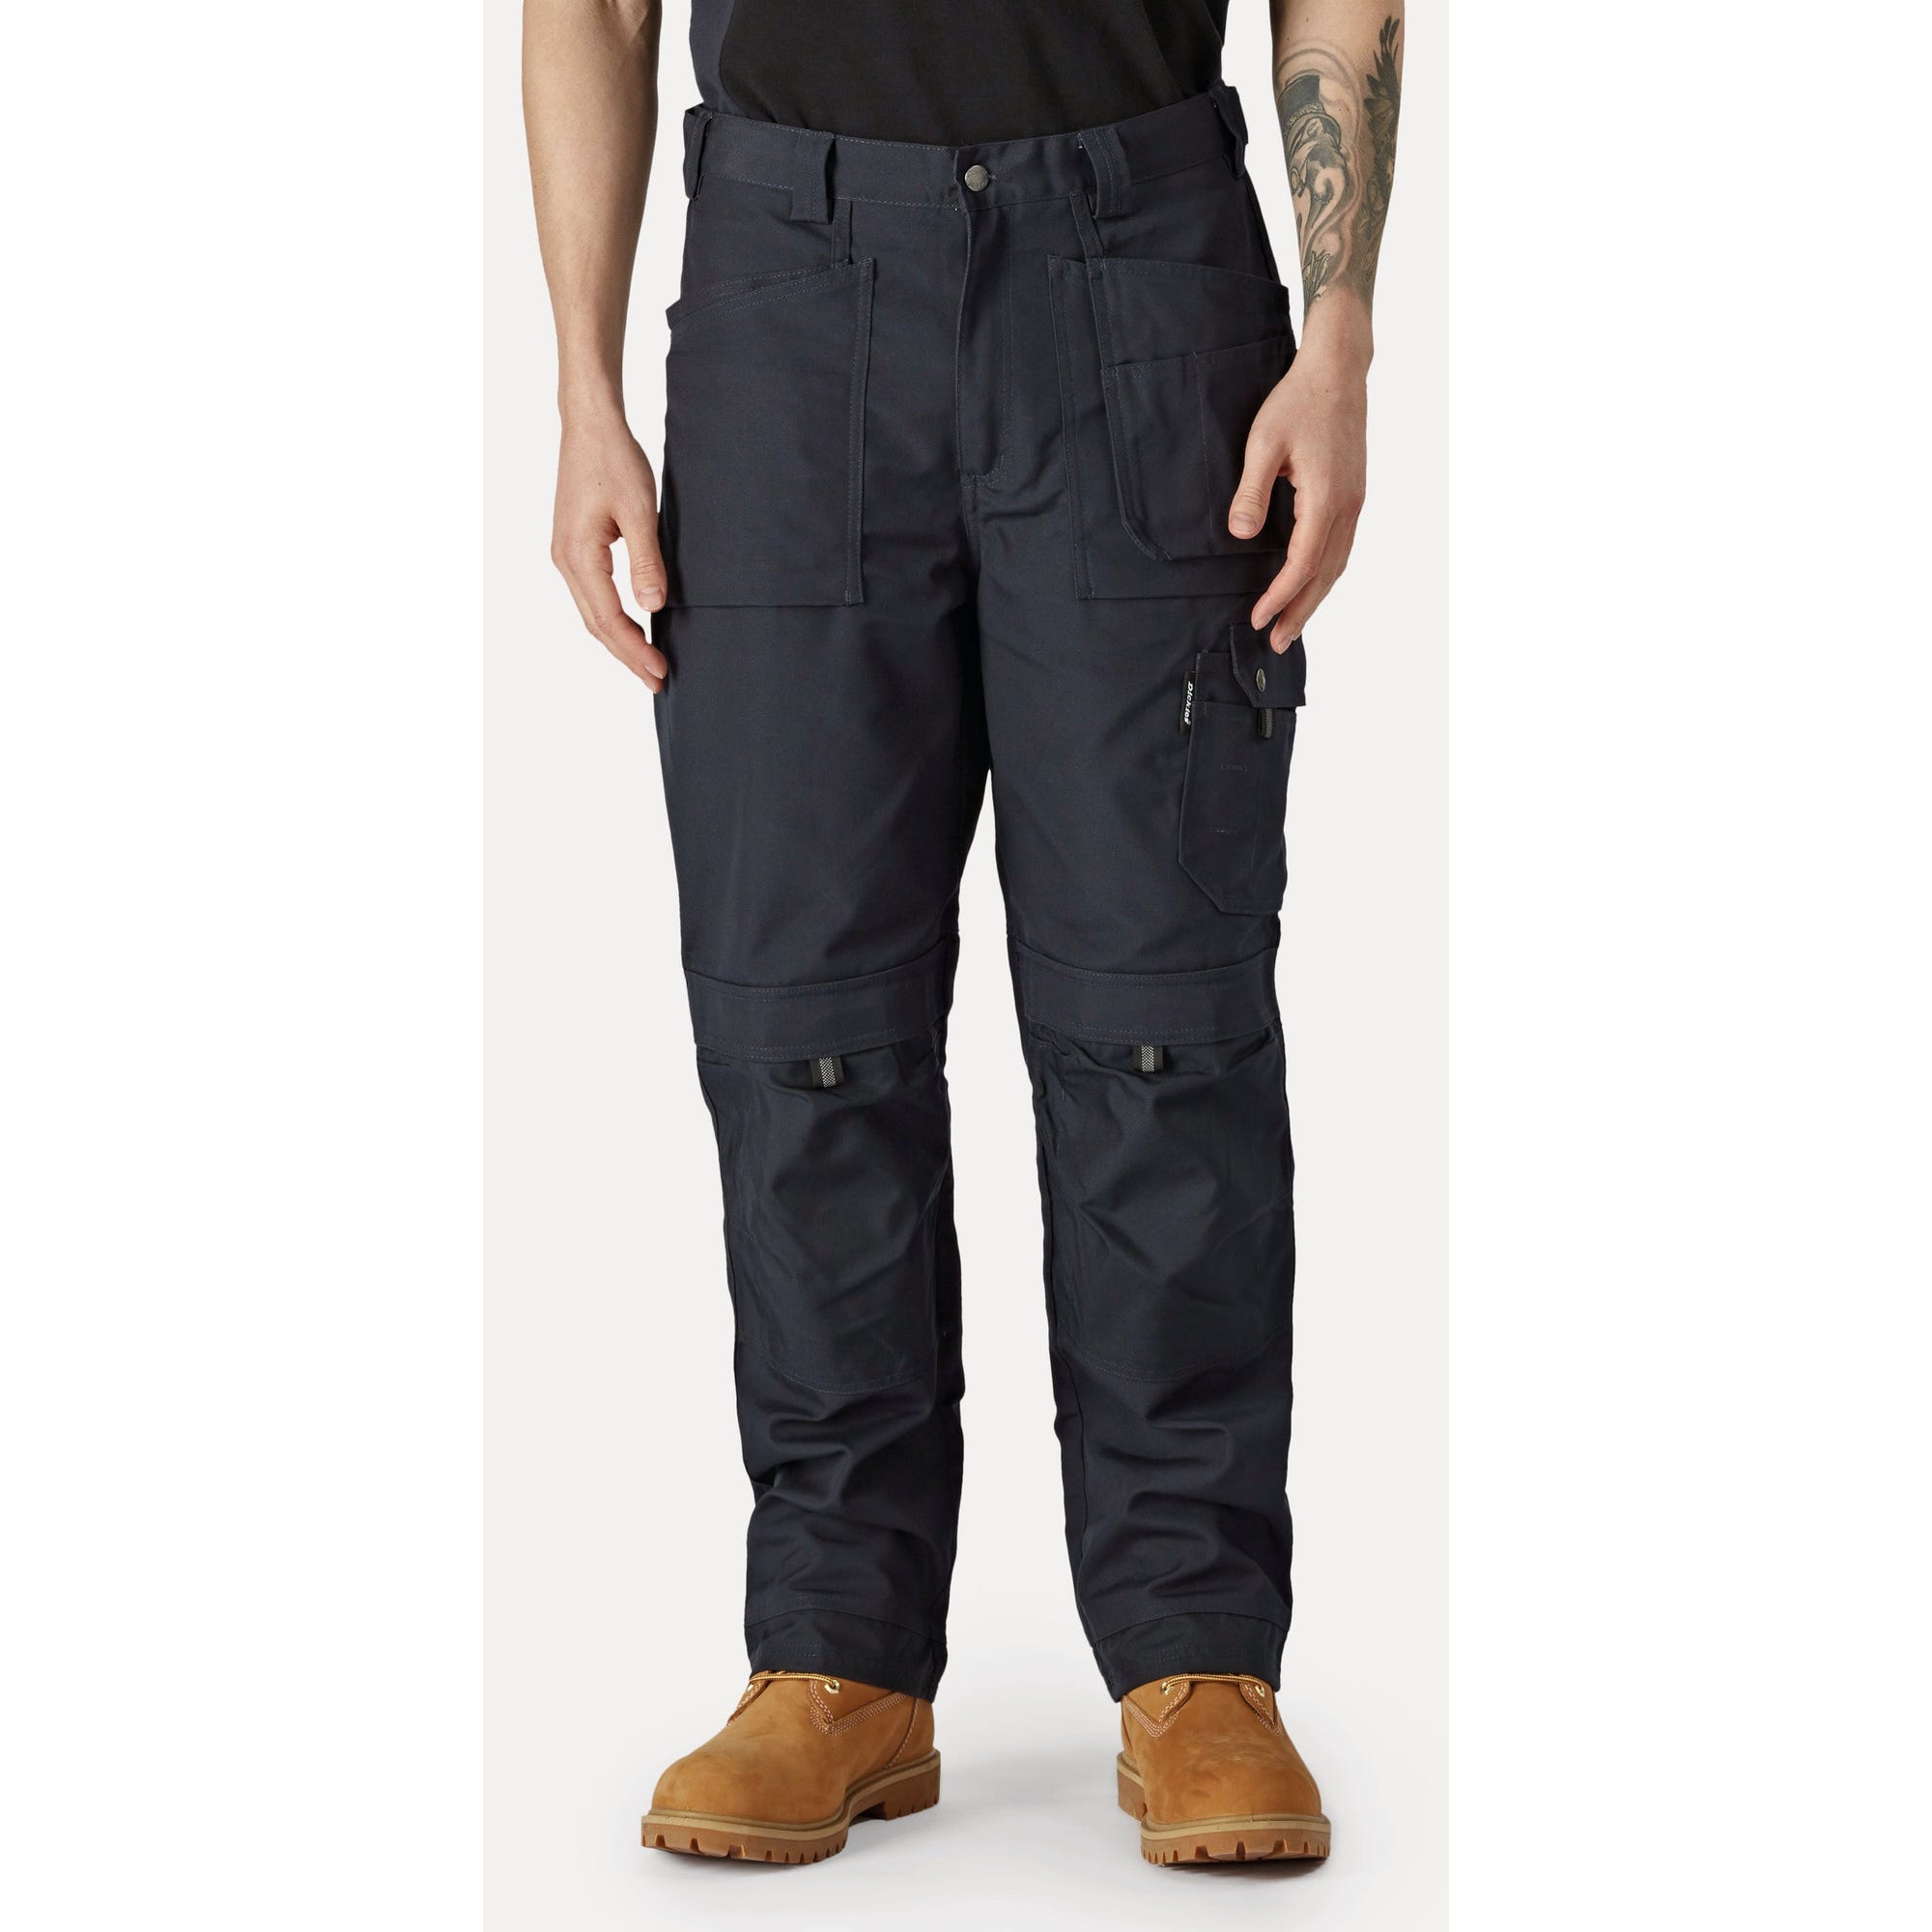 Pantalon Eisenhower multi-poches Noir - Dickies - Taille 44 5